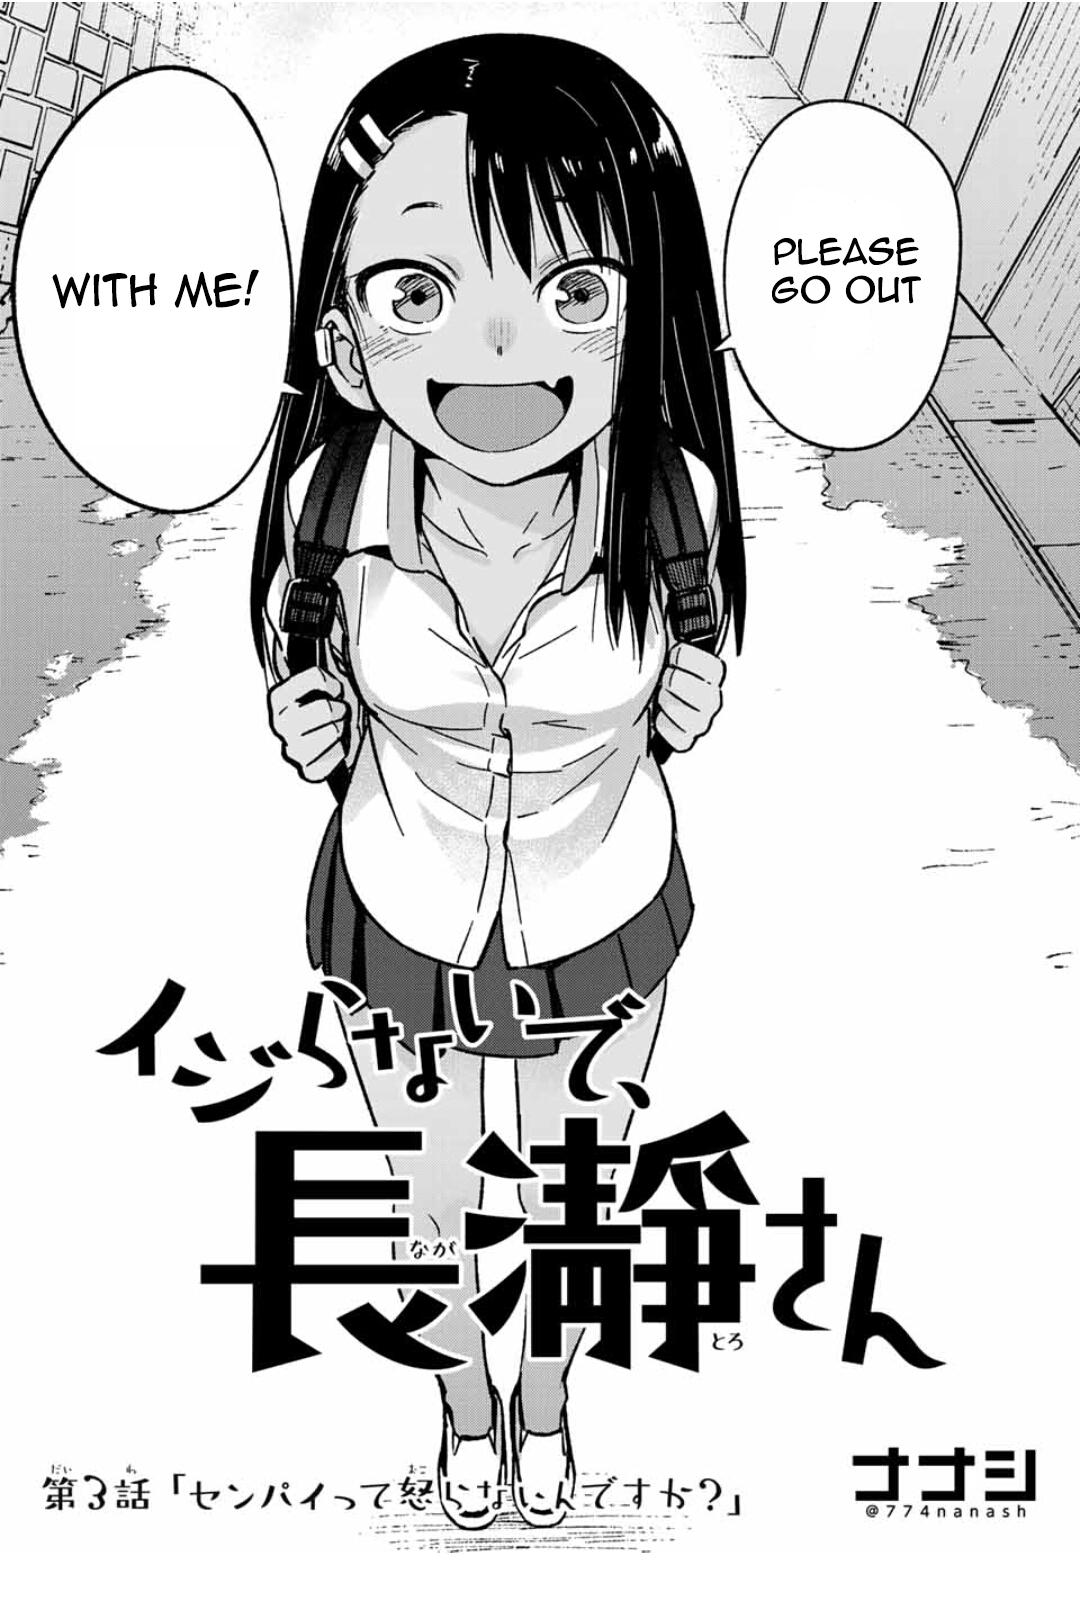 Please Don't Bully Me, Nagatoro Vol.1 Chapter 3